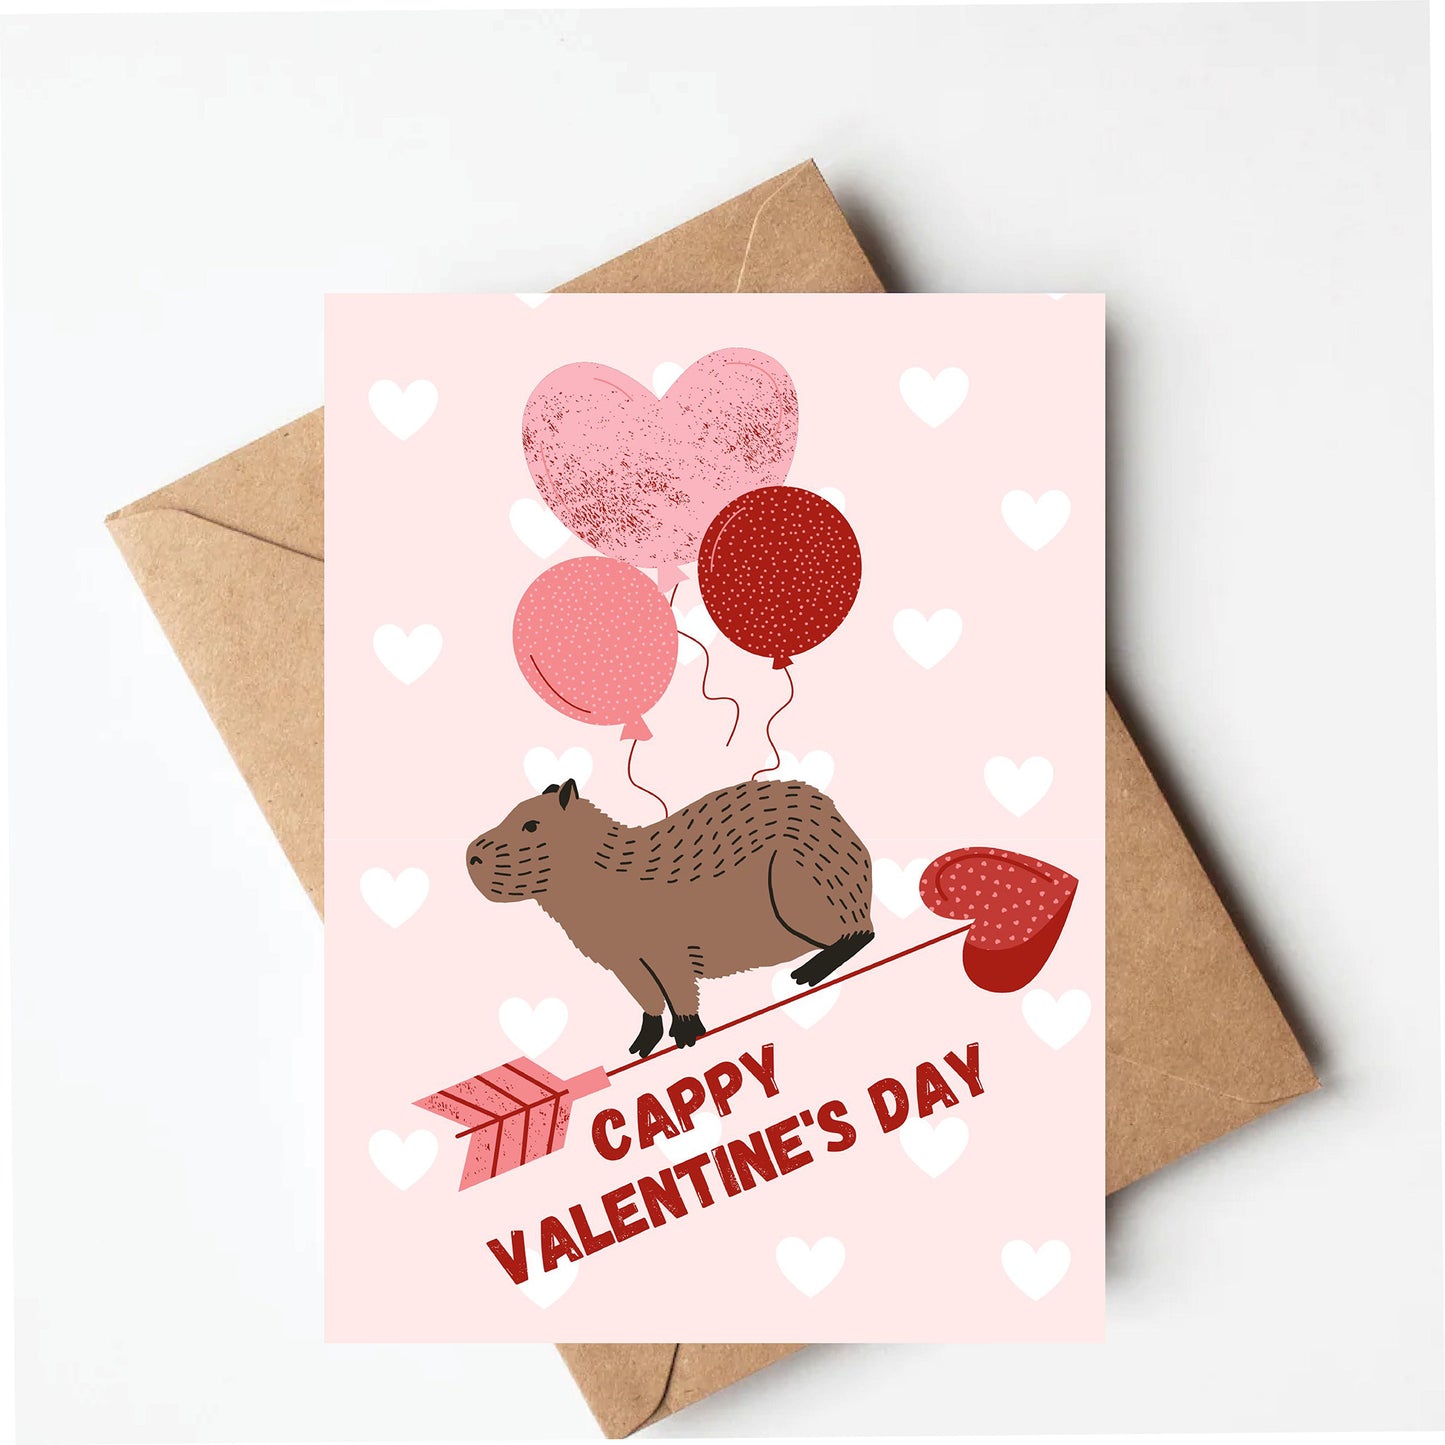 Capybara valentines day card